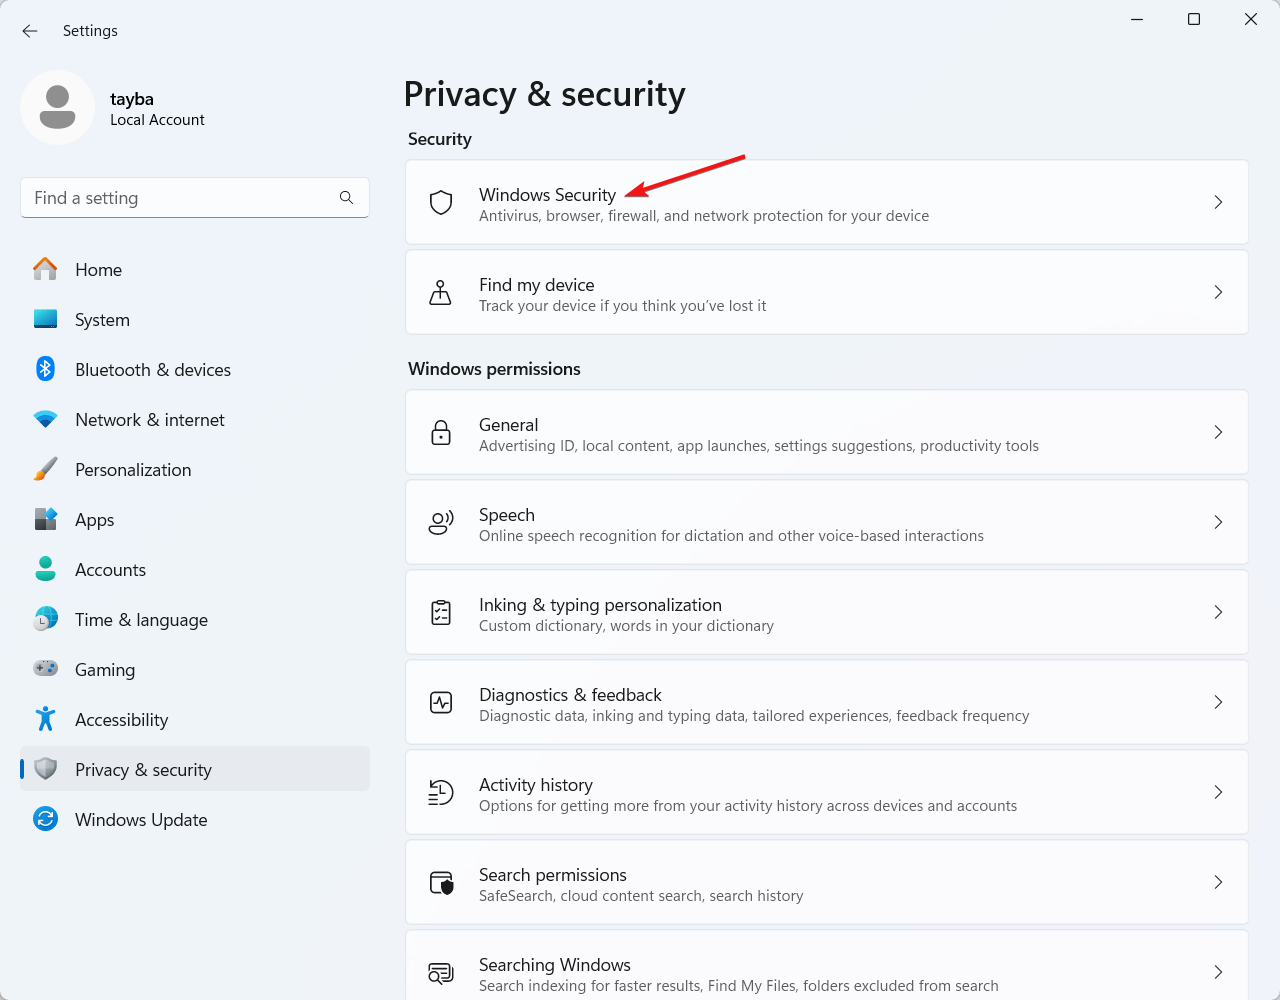 Choose Windows Security option